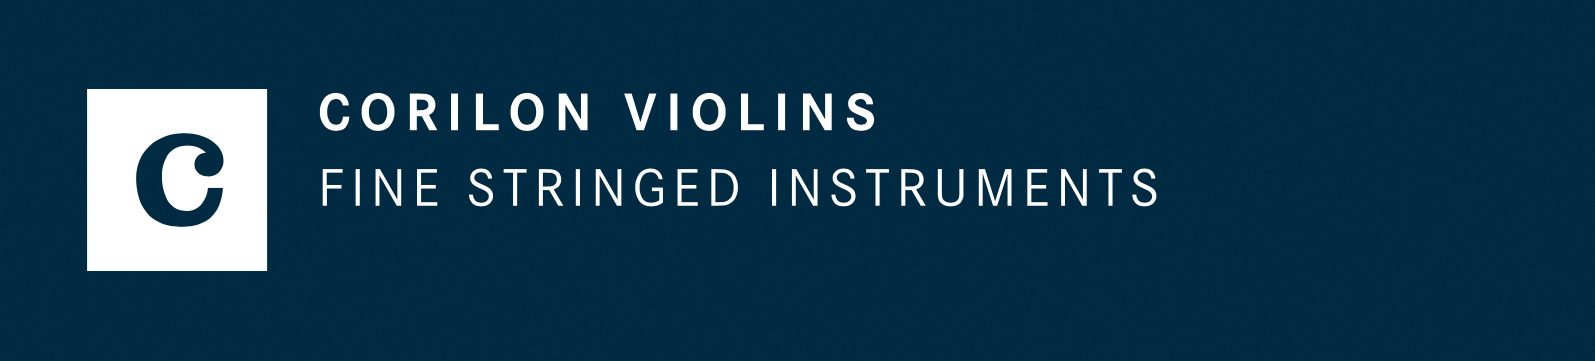 Corilon violins